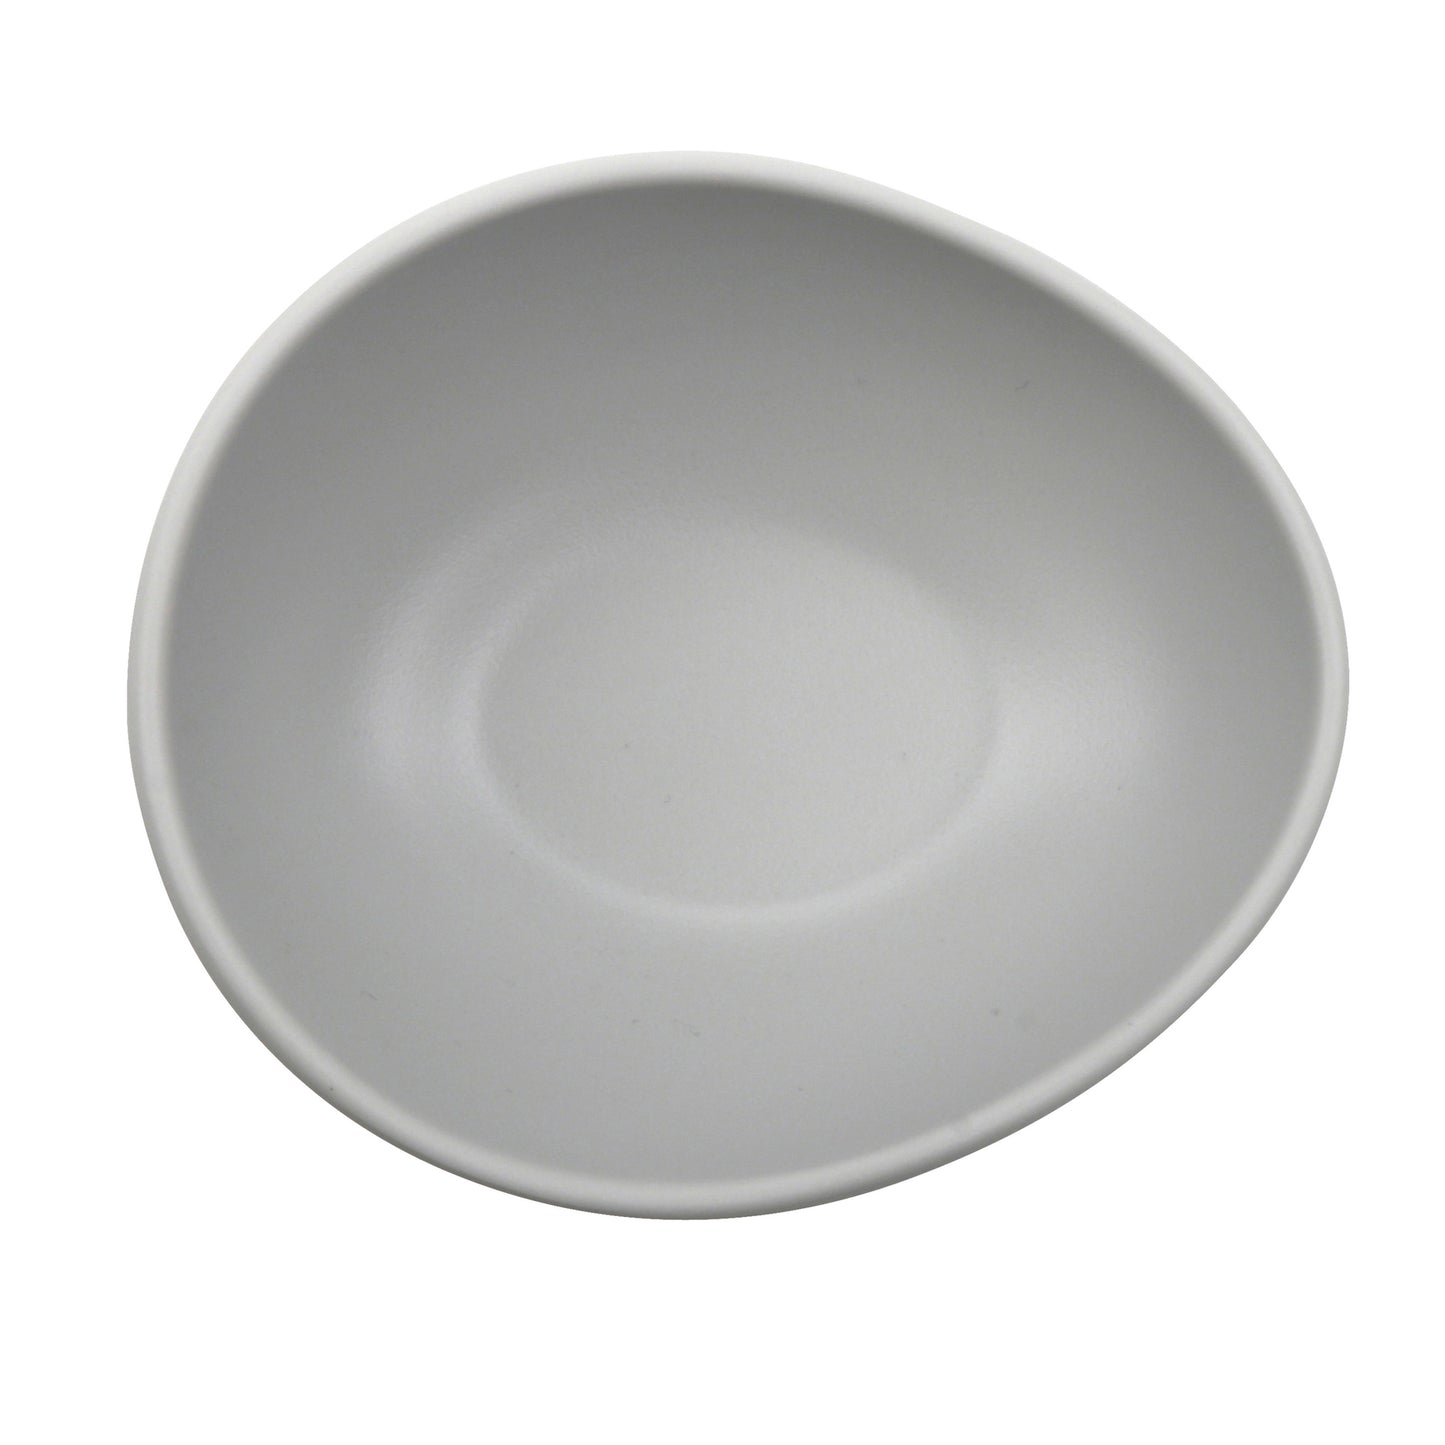 8 oz. Light Gray, Melamine, Small Side Dish/Soup Bowl, (11 oz. rim-full), 1.8" H, (2.1" Max H), 5.1" L x 4.4" W, G.E.T. Riverstone (12 Pack)